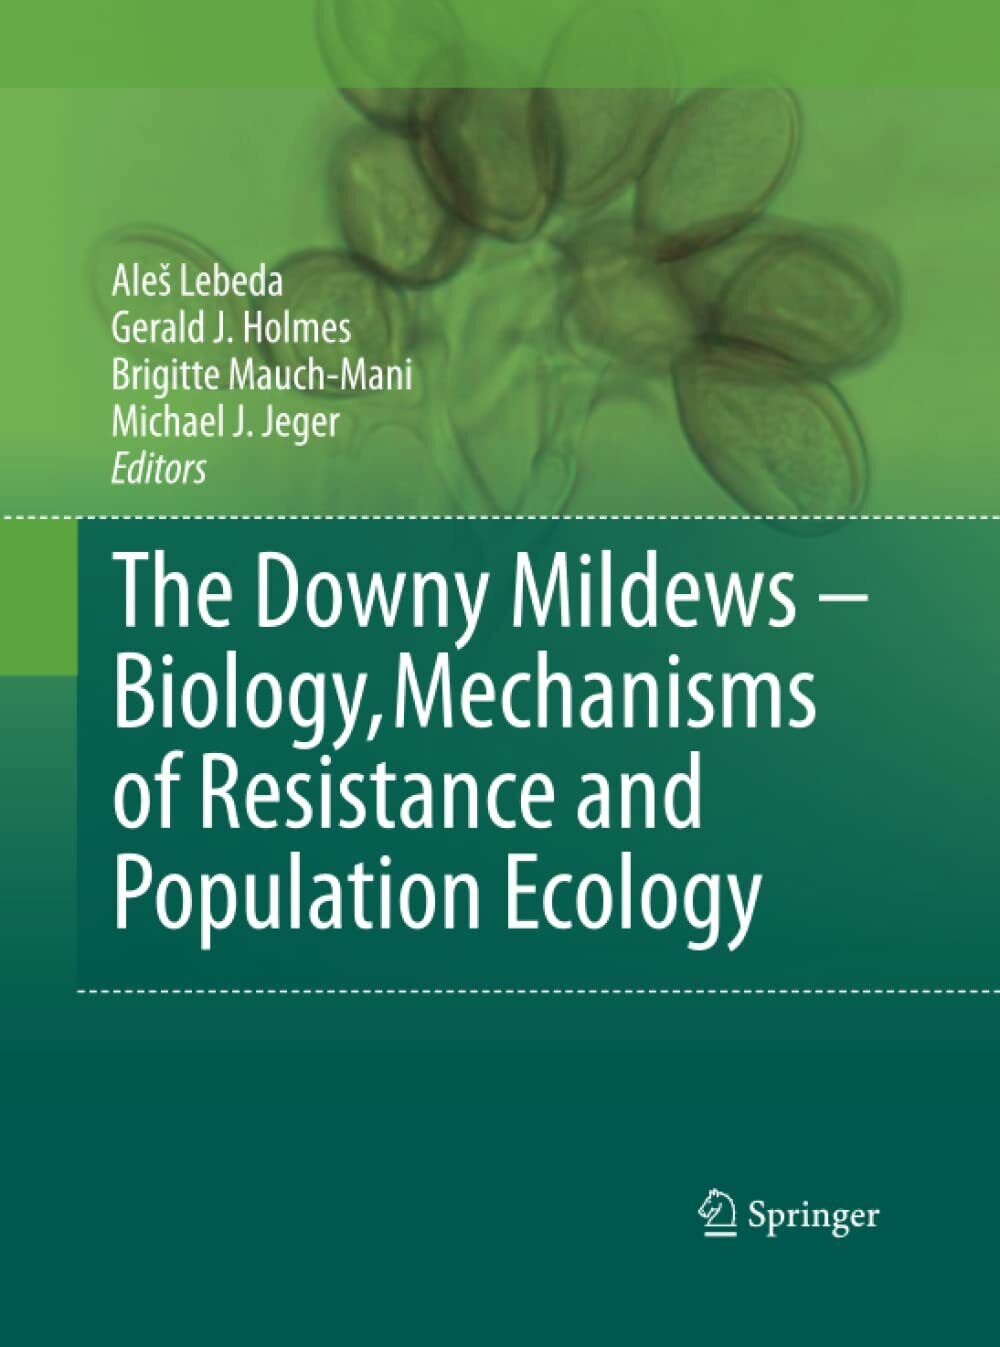 The Downy Mildews - Ale? Lebeda - Springer, 2014